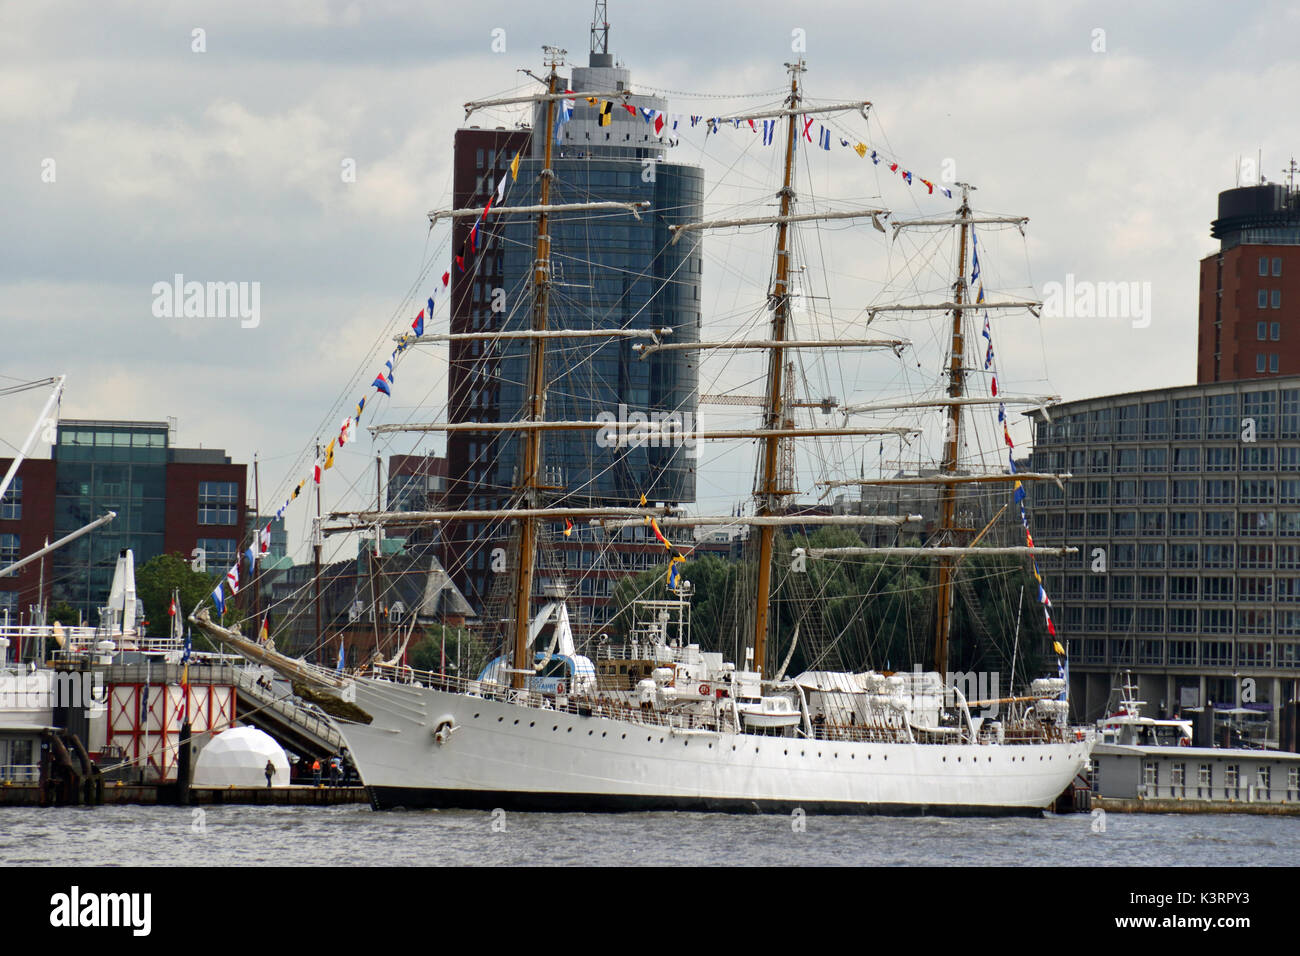 The large sailing ship Ara Libertad is located in the harbor of Hamburg. Stock Photo